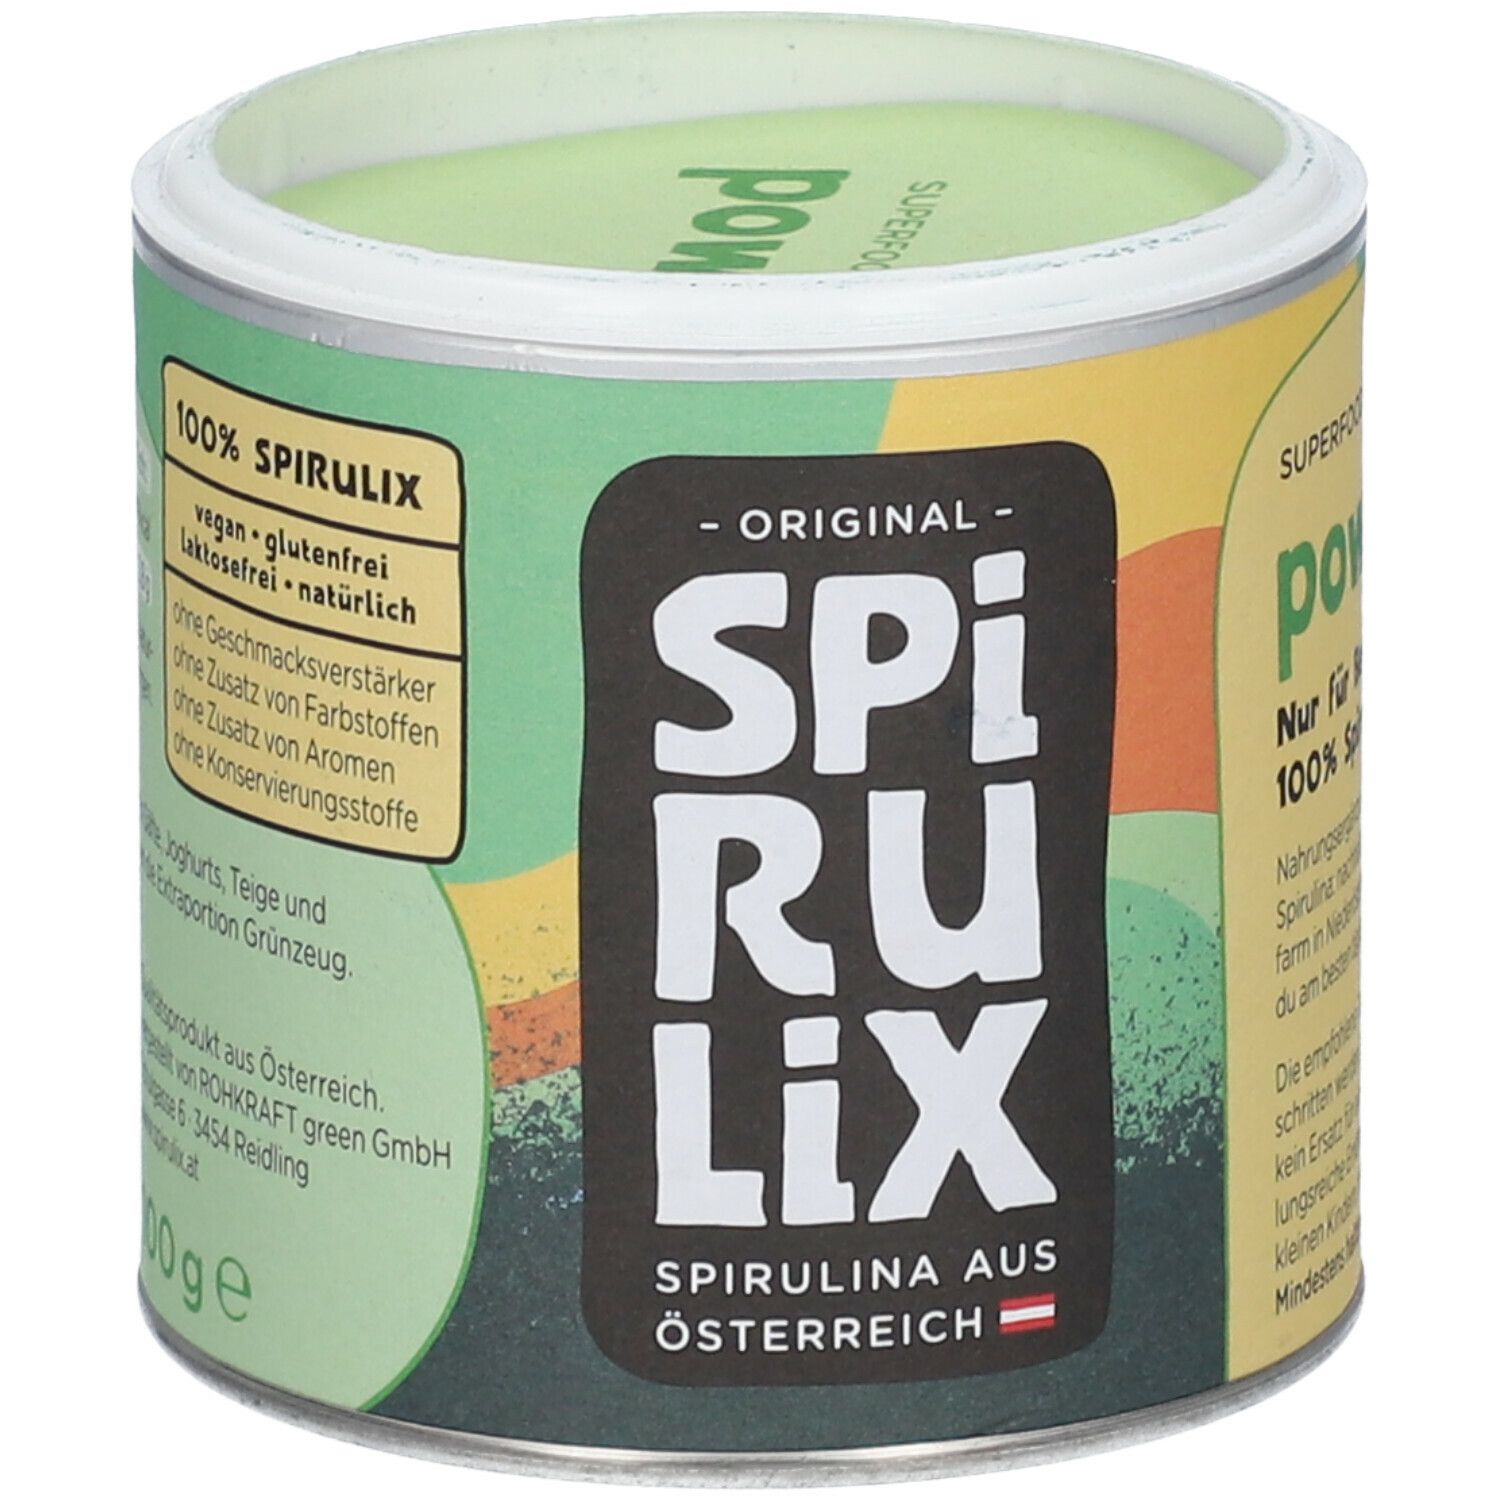 Image of Spirulix Spirulina Powder